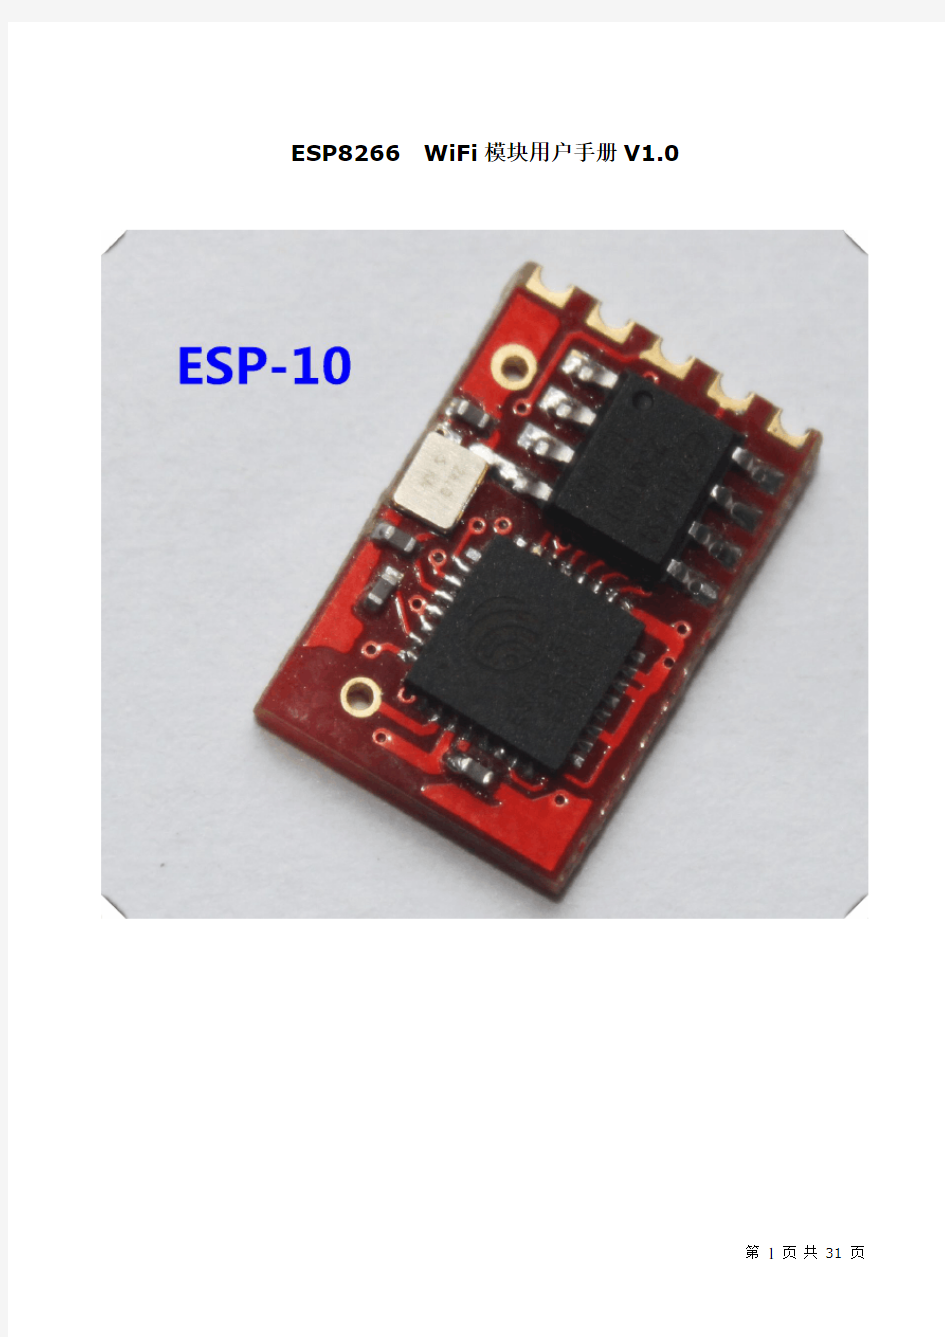 ESP8266-10 WiFi模块用户手册V1.0